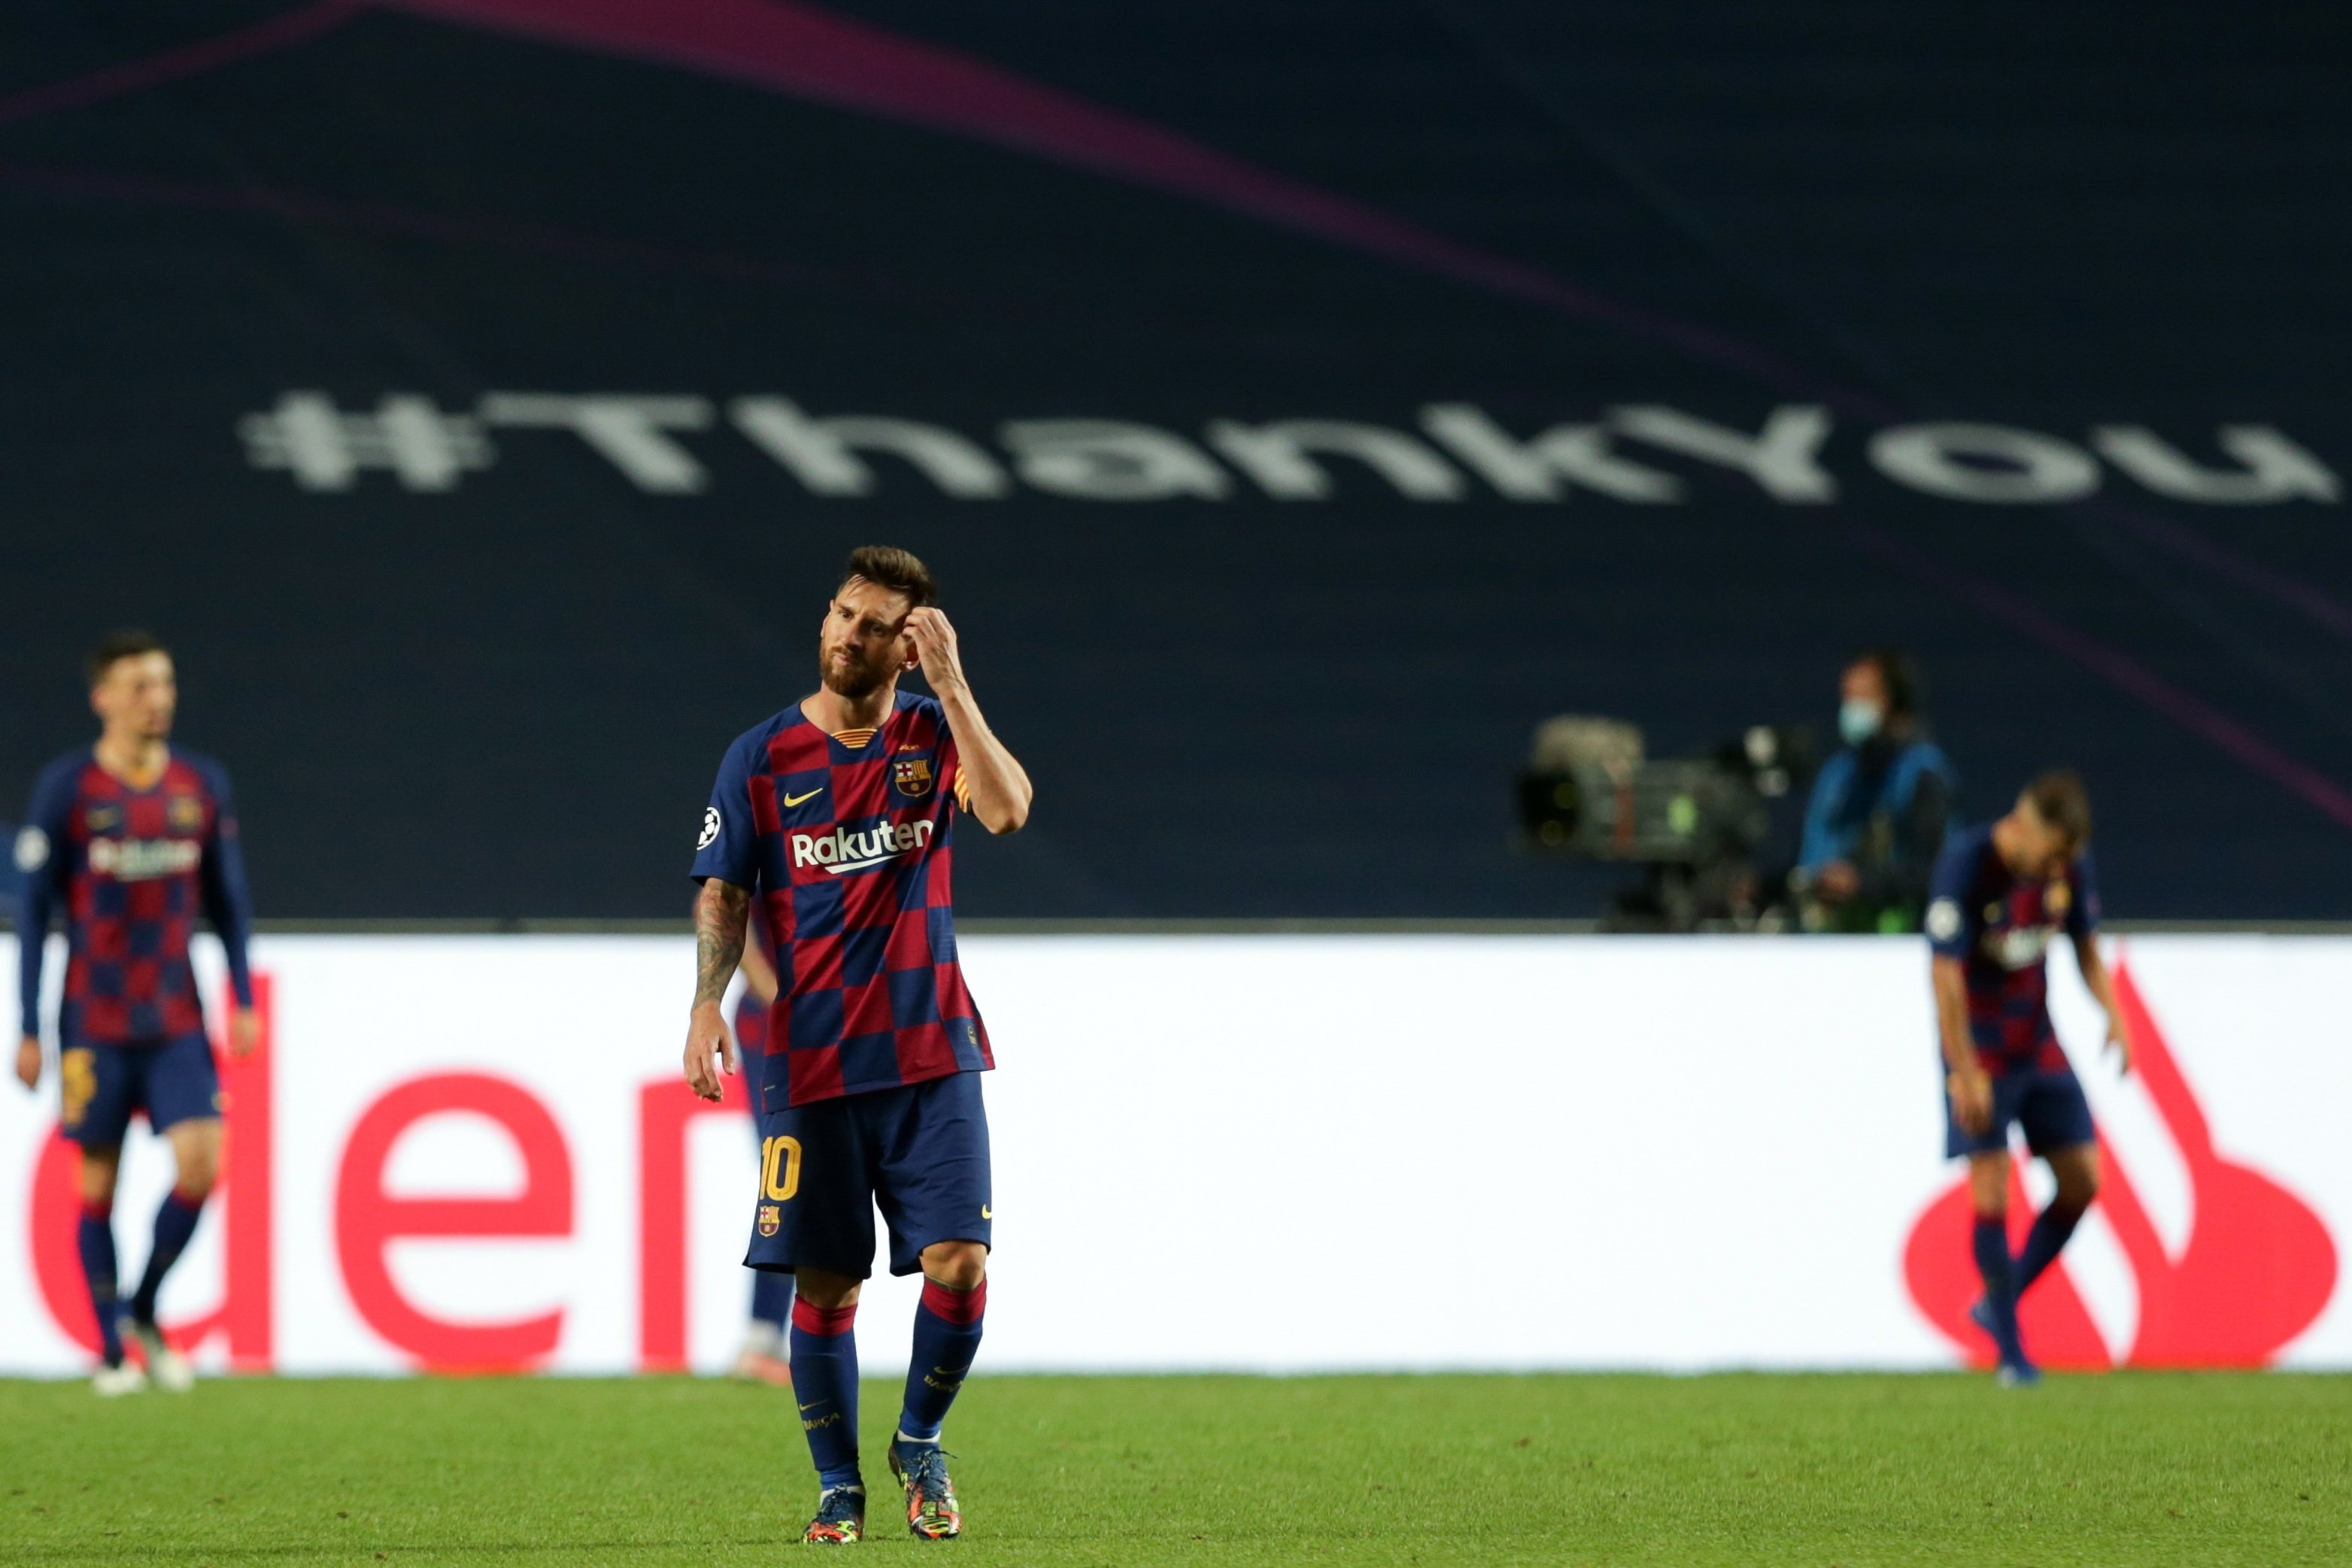 Leo Messi tells new coach Koeman that he's likely to leave Barça